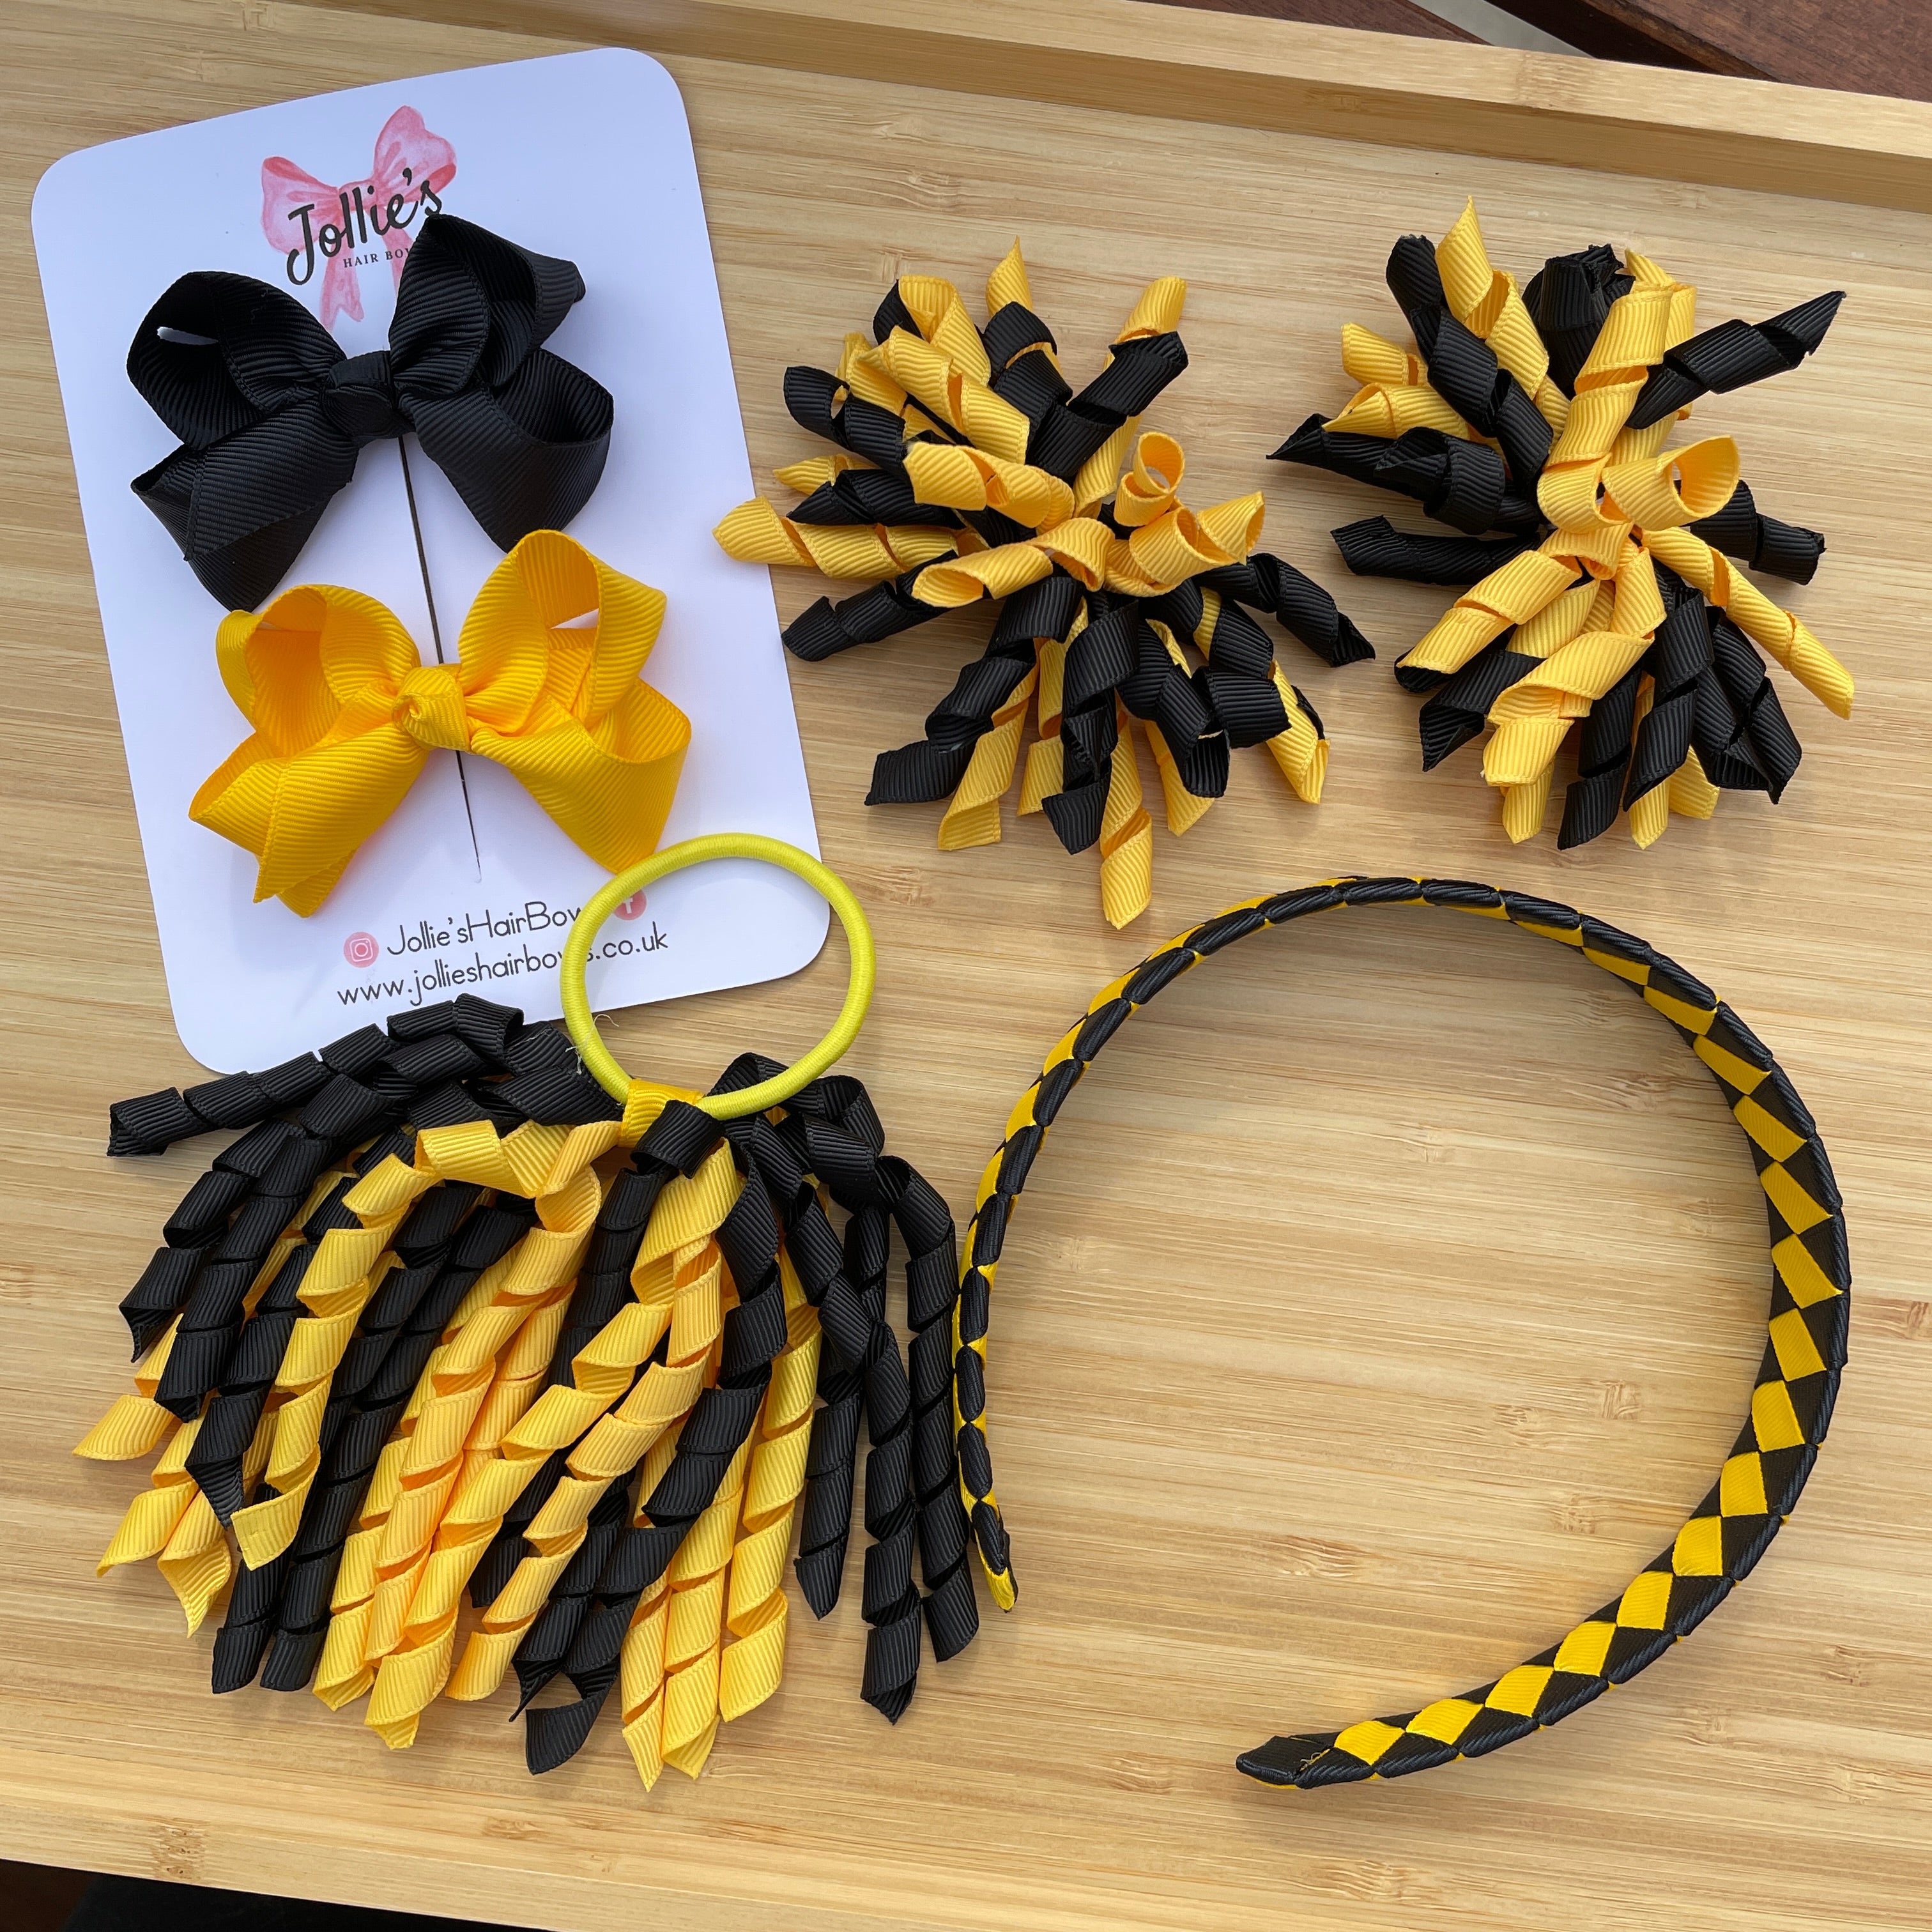 6 items School Bundle - Black & Yellow